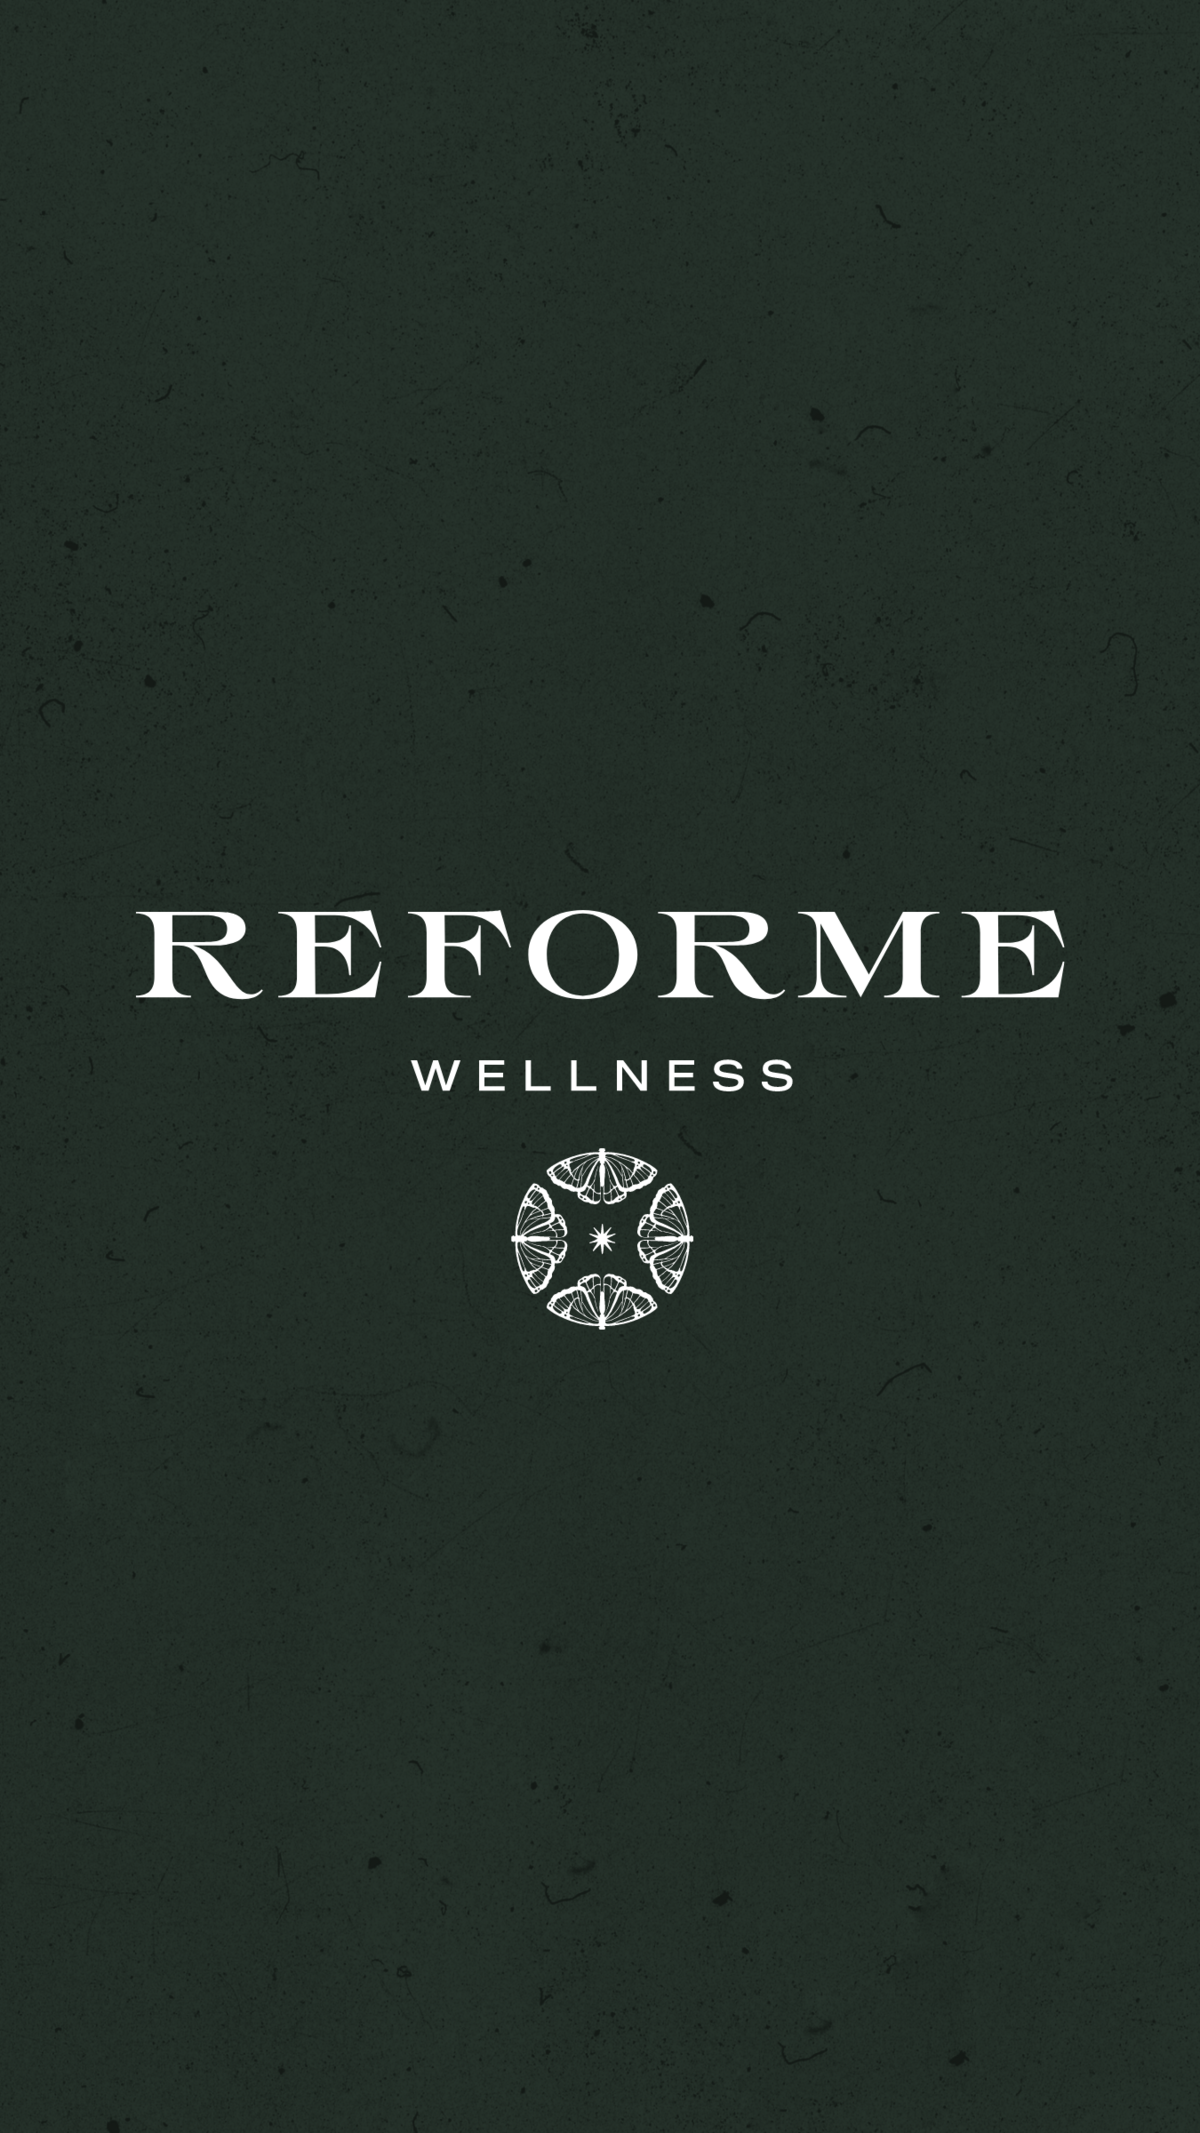 Reforme - Mystical Semi Custom Brand Template by Sarah Ann Design - 47